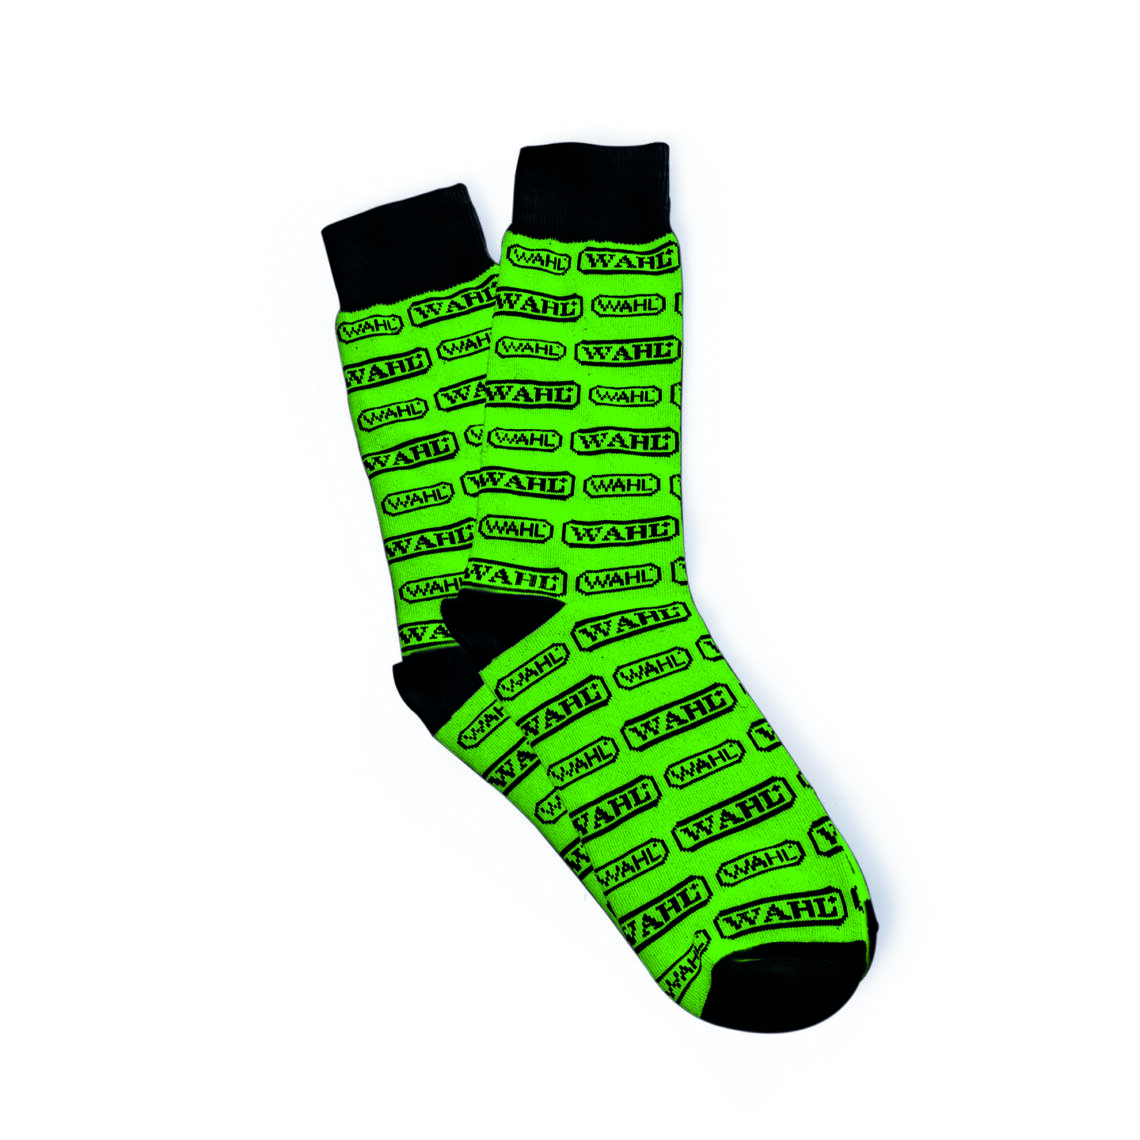 Green and black socks